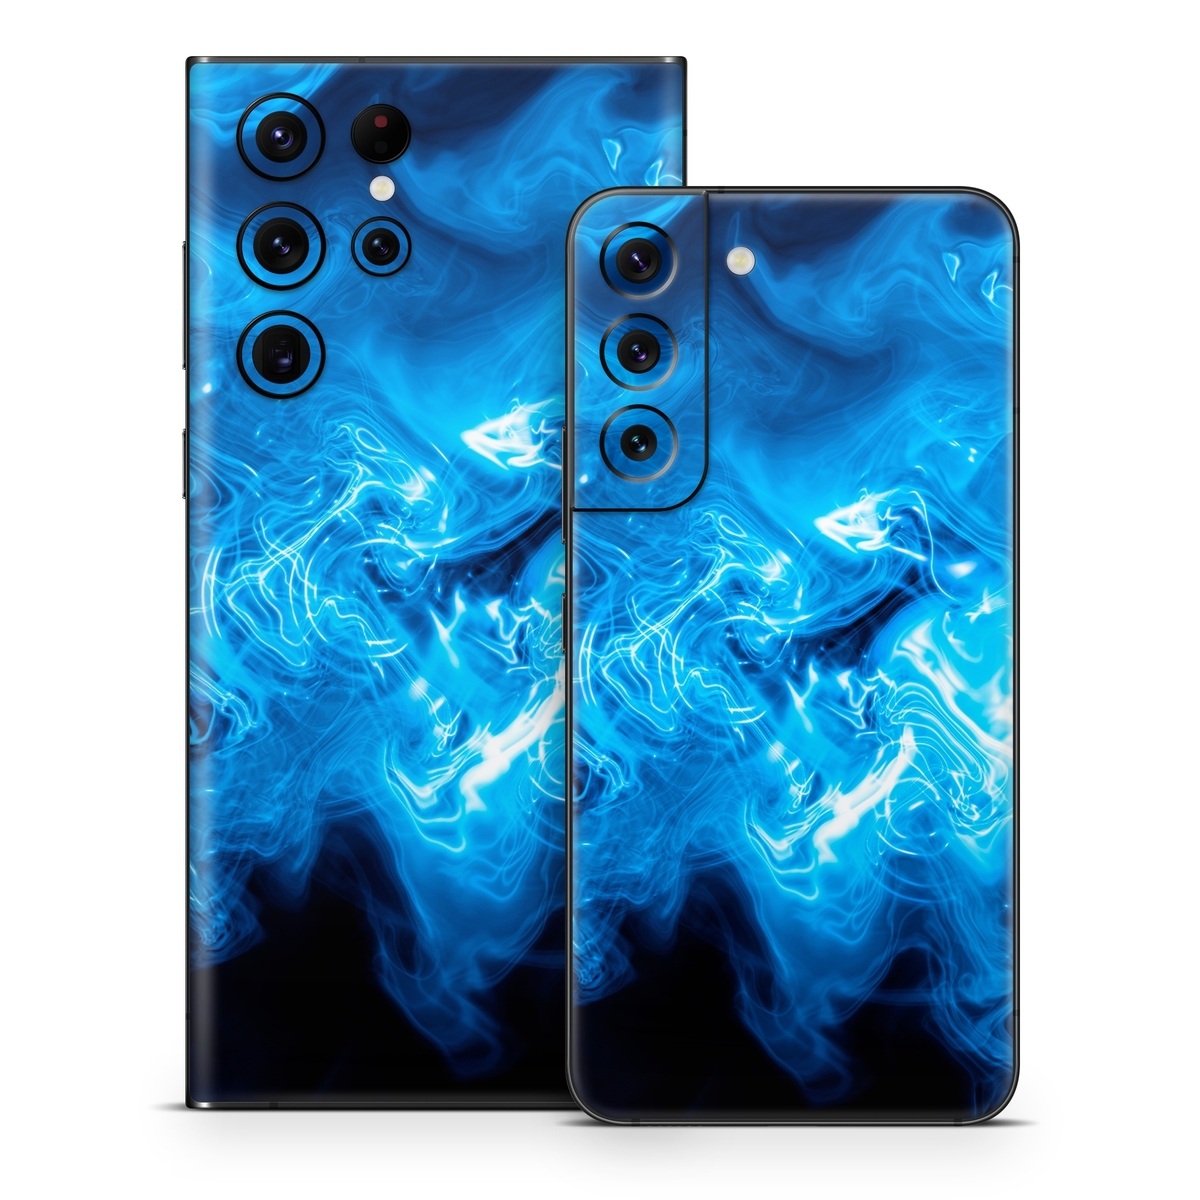 Samsung Galaxy S22 Series Skin design of Blue, Water, Electric blue, Organism, Pattern, Smoke, Liquid, Art, with blue, black, purple colors